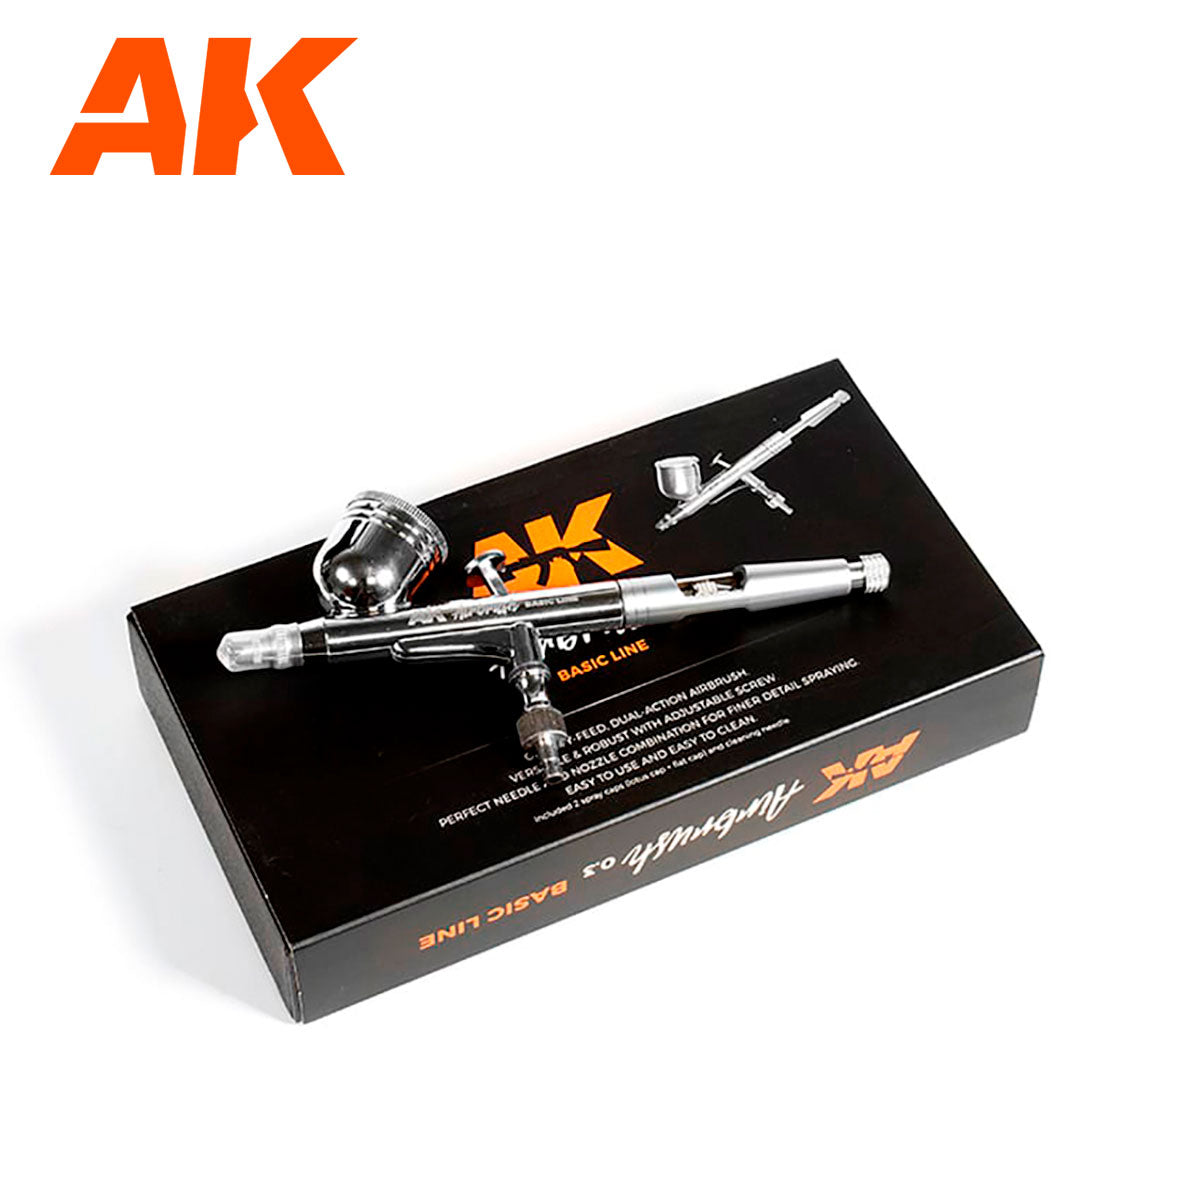 AK Airbrush - Basic Line 0.3mm